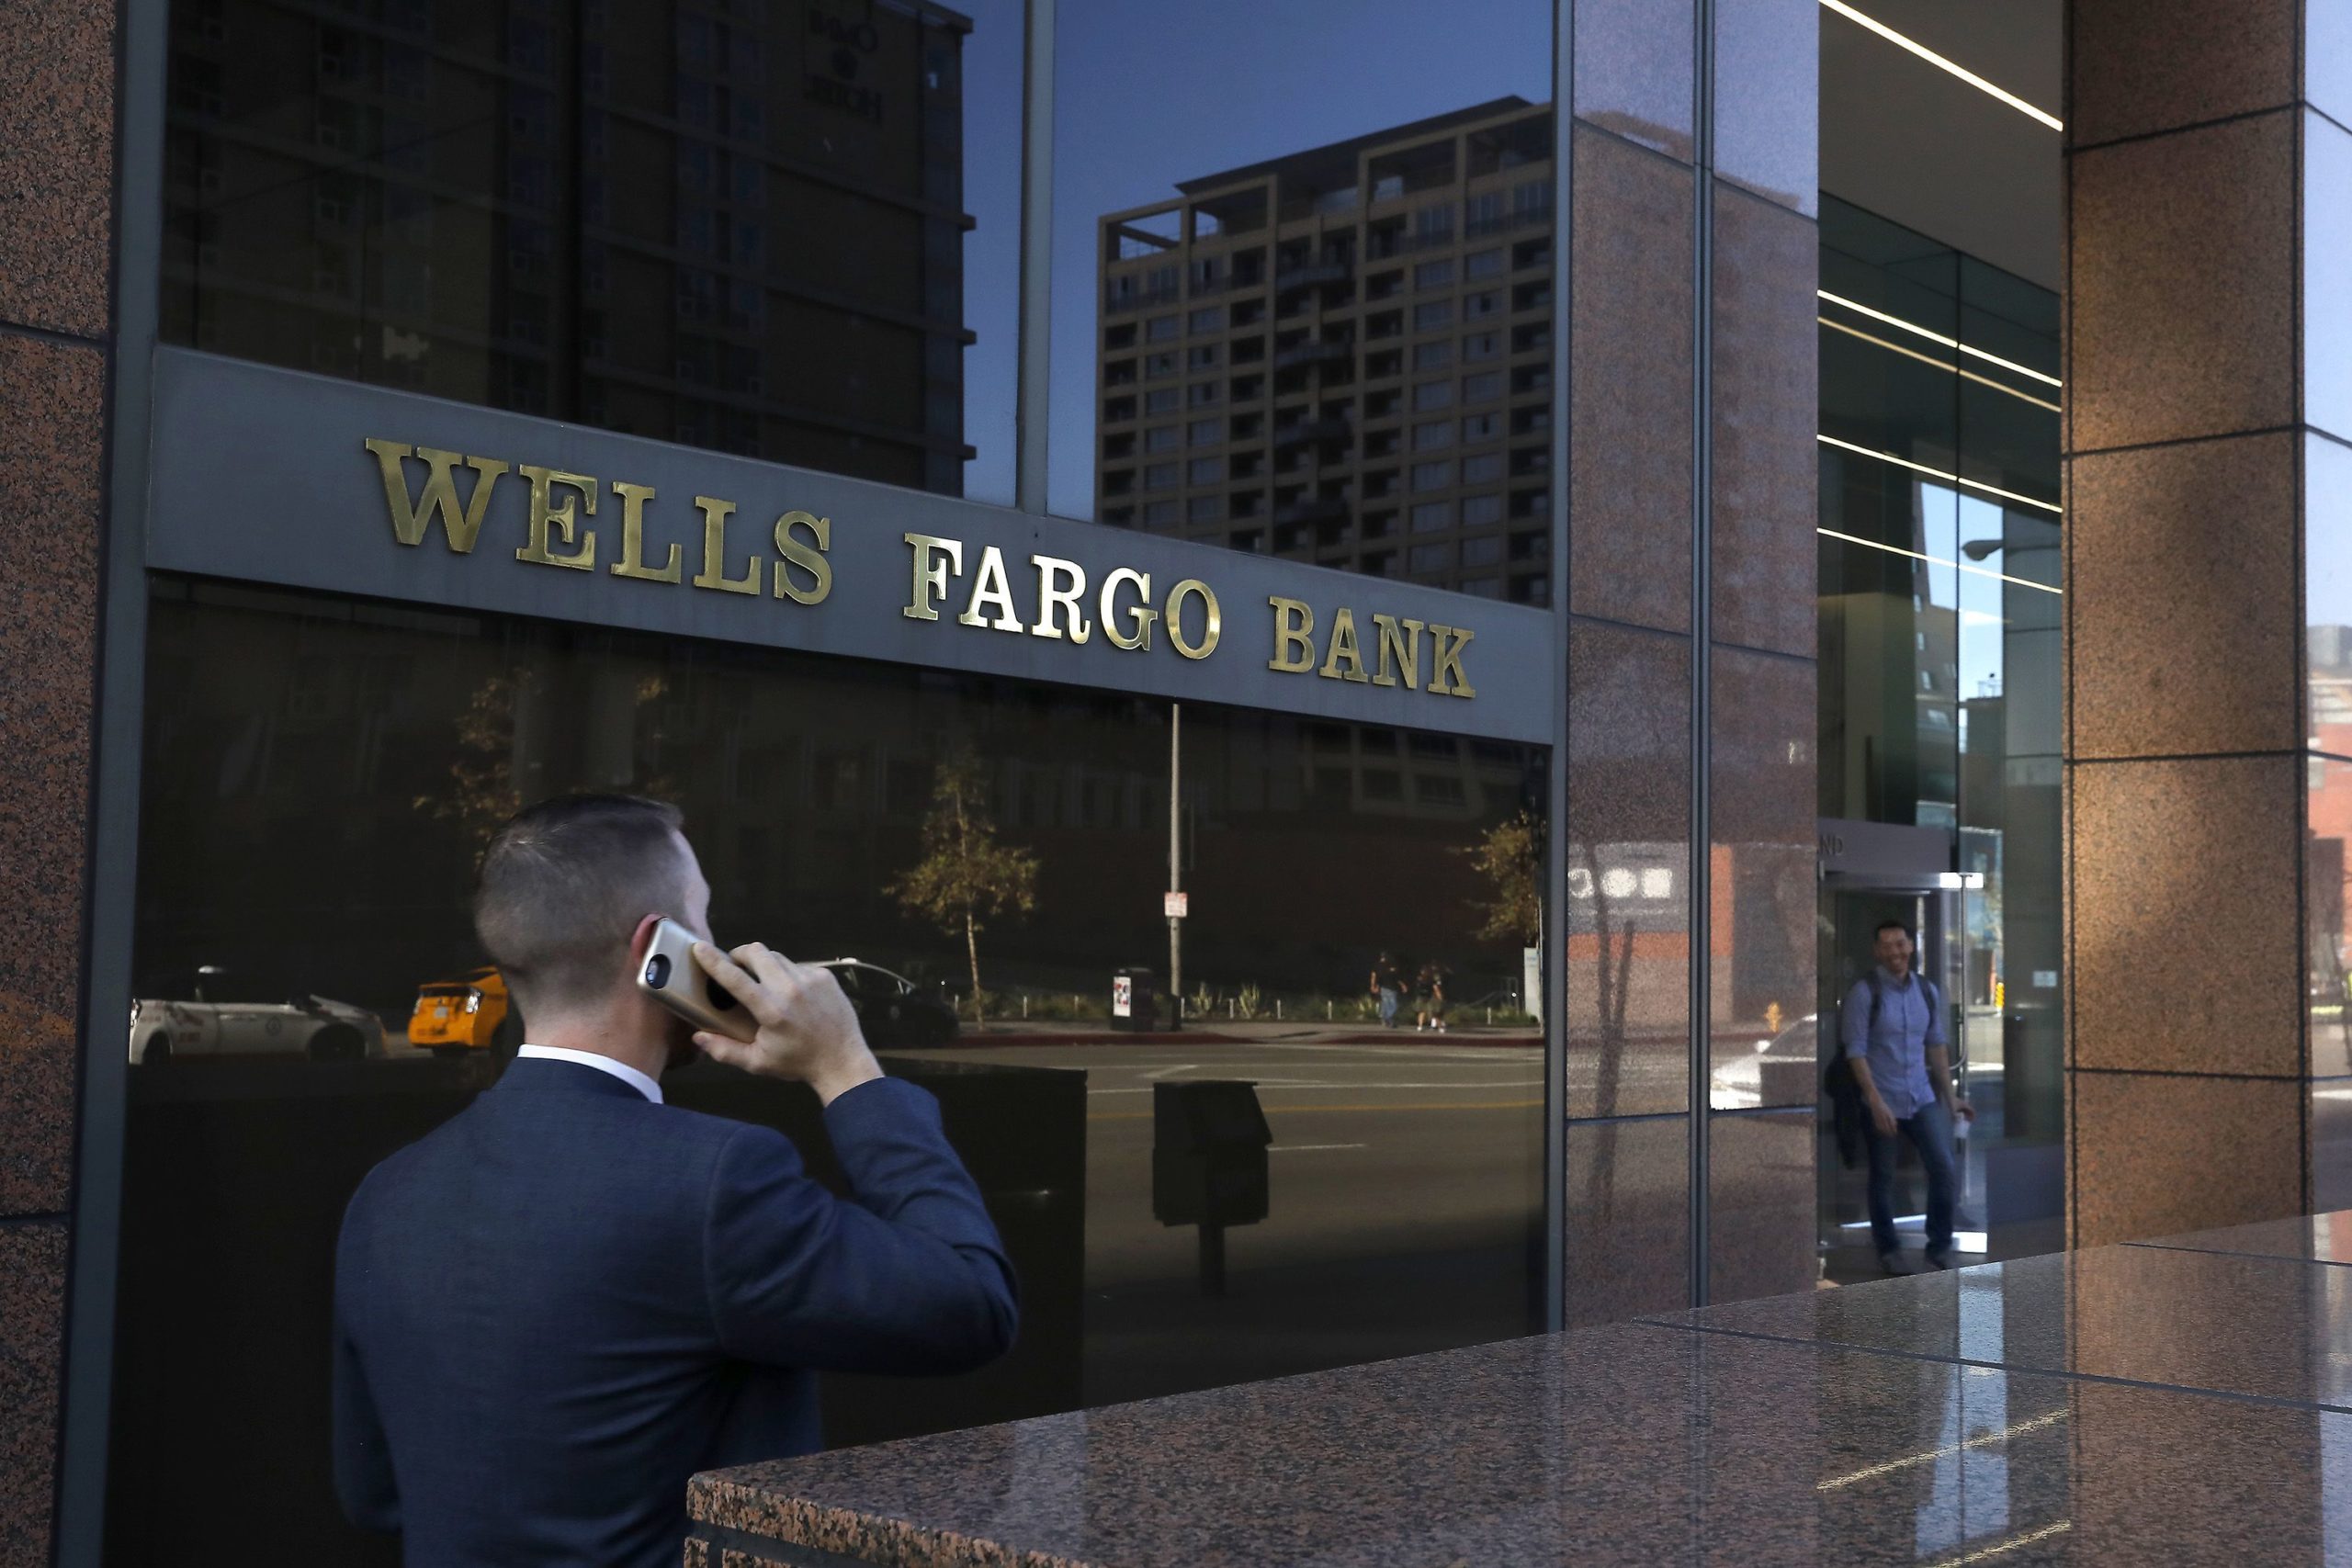 A pedestrian walks past a Wells Fargo bank in downtown Los Angeles on Feb. 5, 2018. (Mel Melcon/Los Angeles Times/TNS)